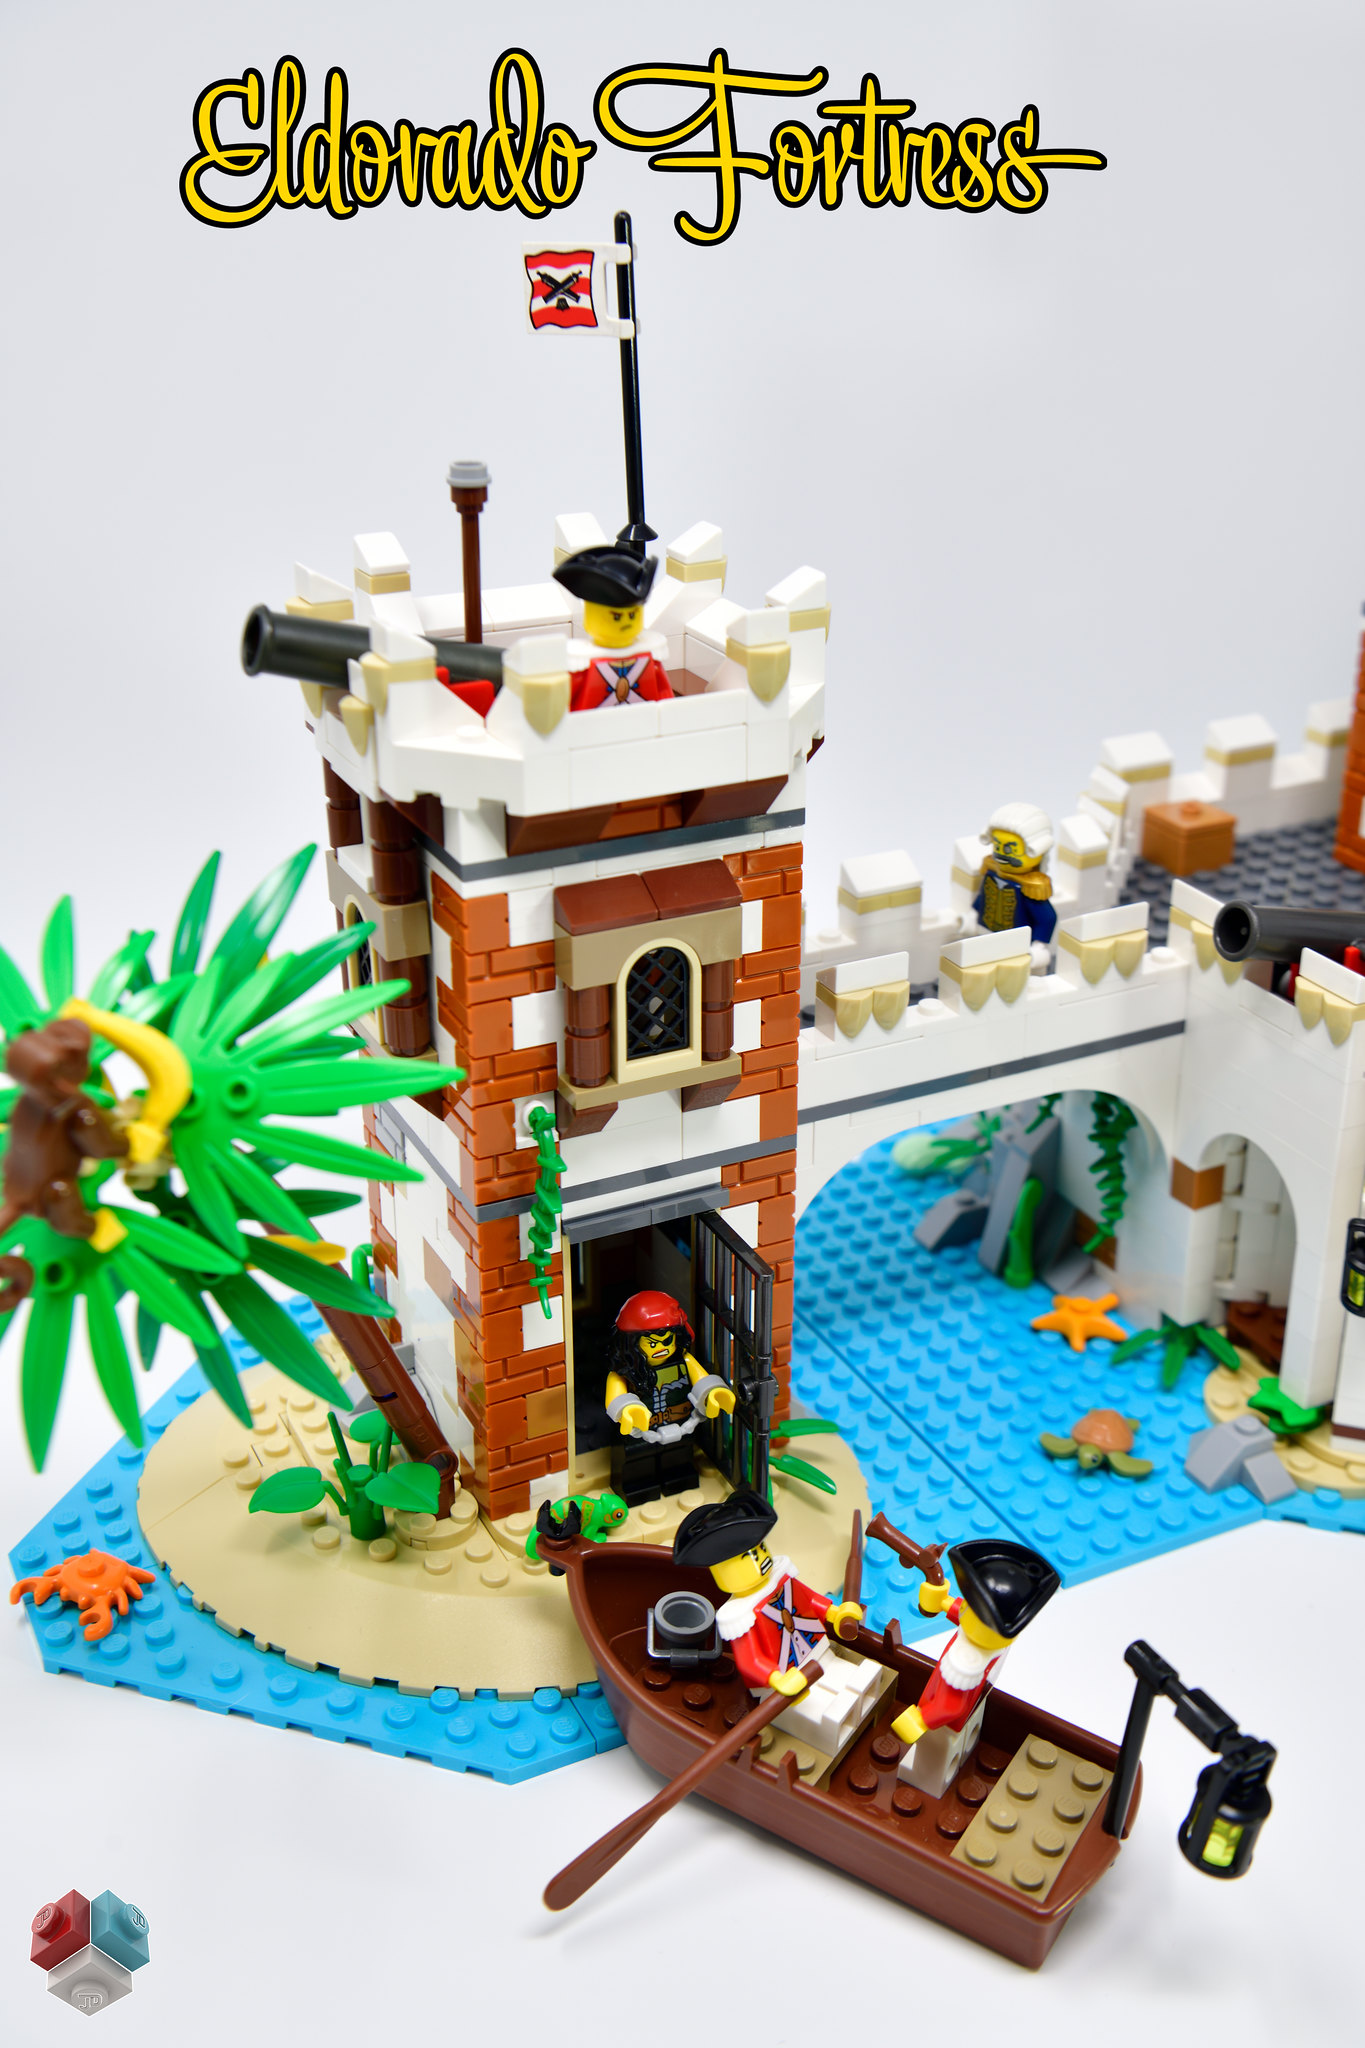 Photo of the LEGO prison